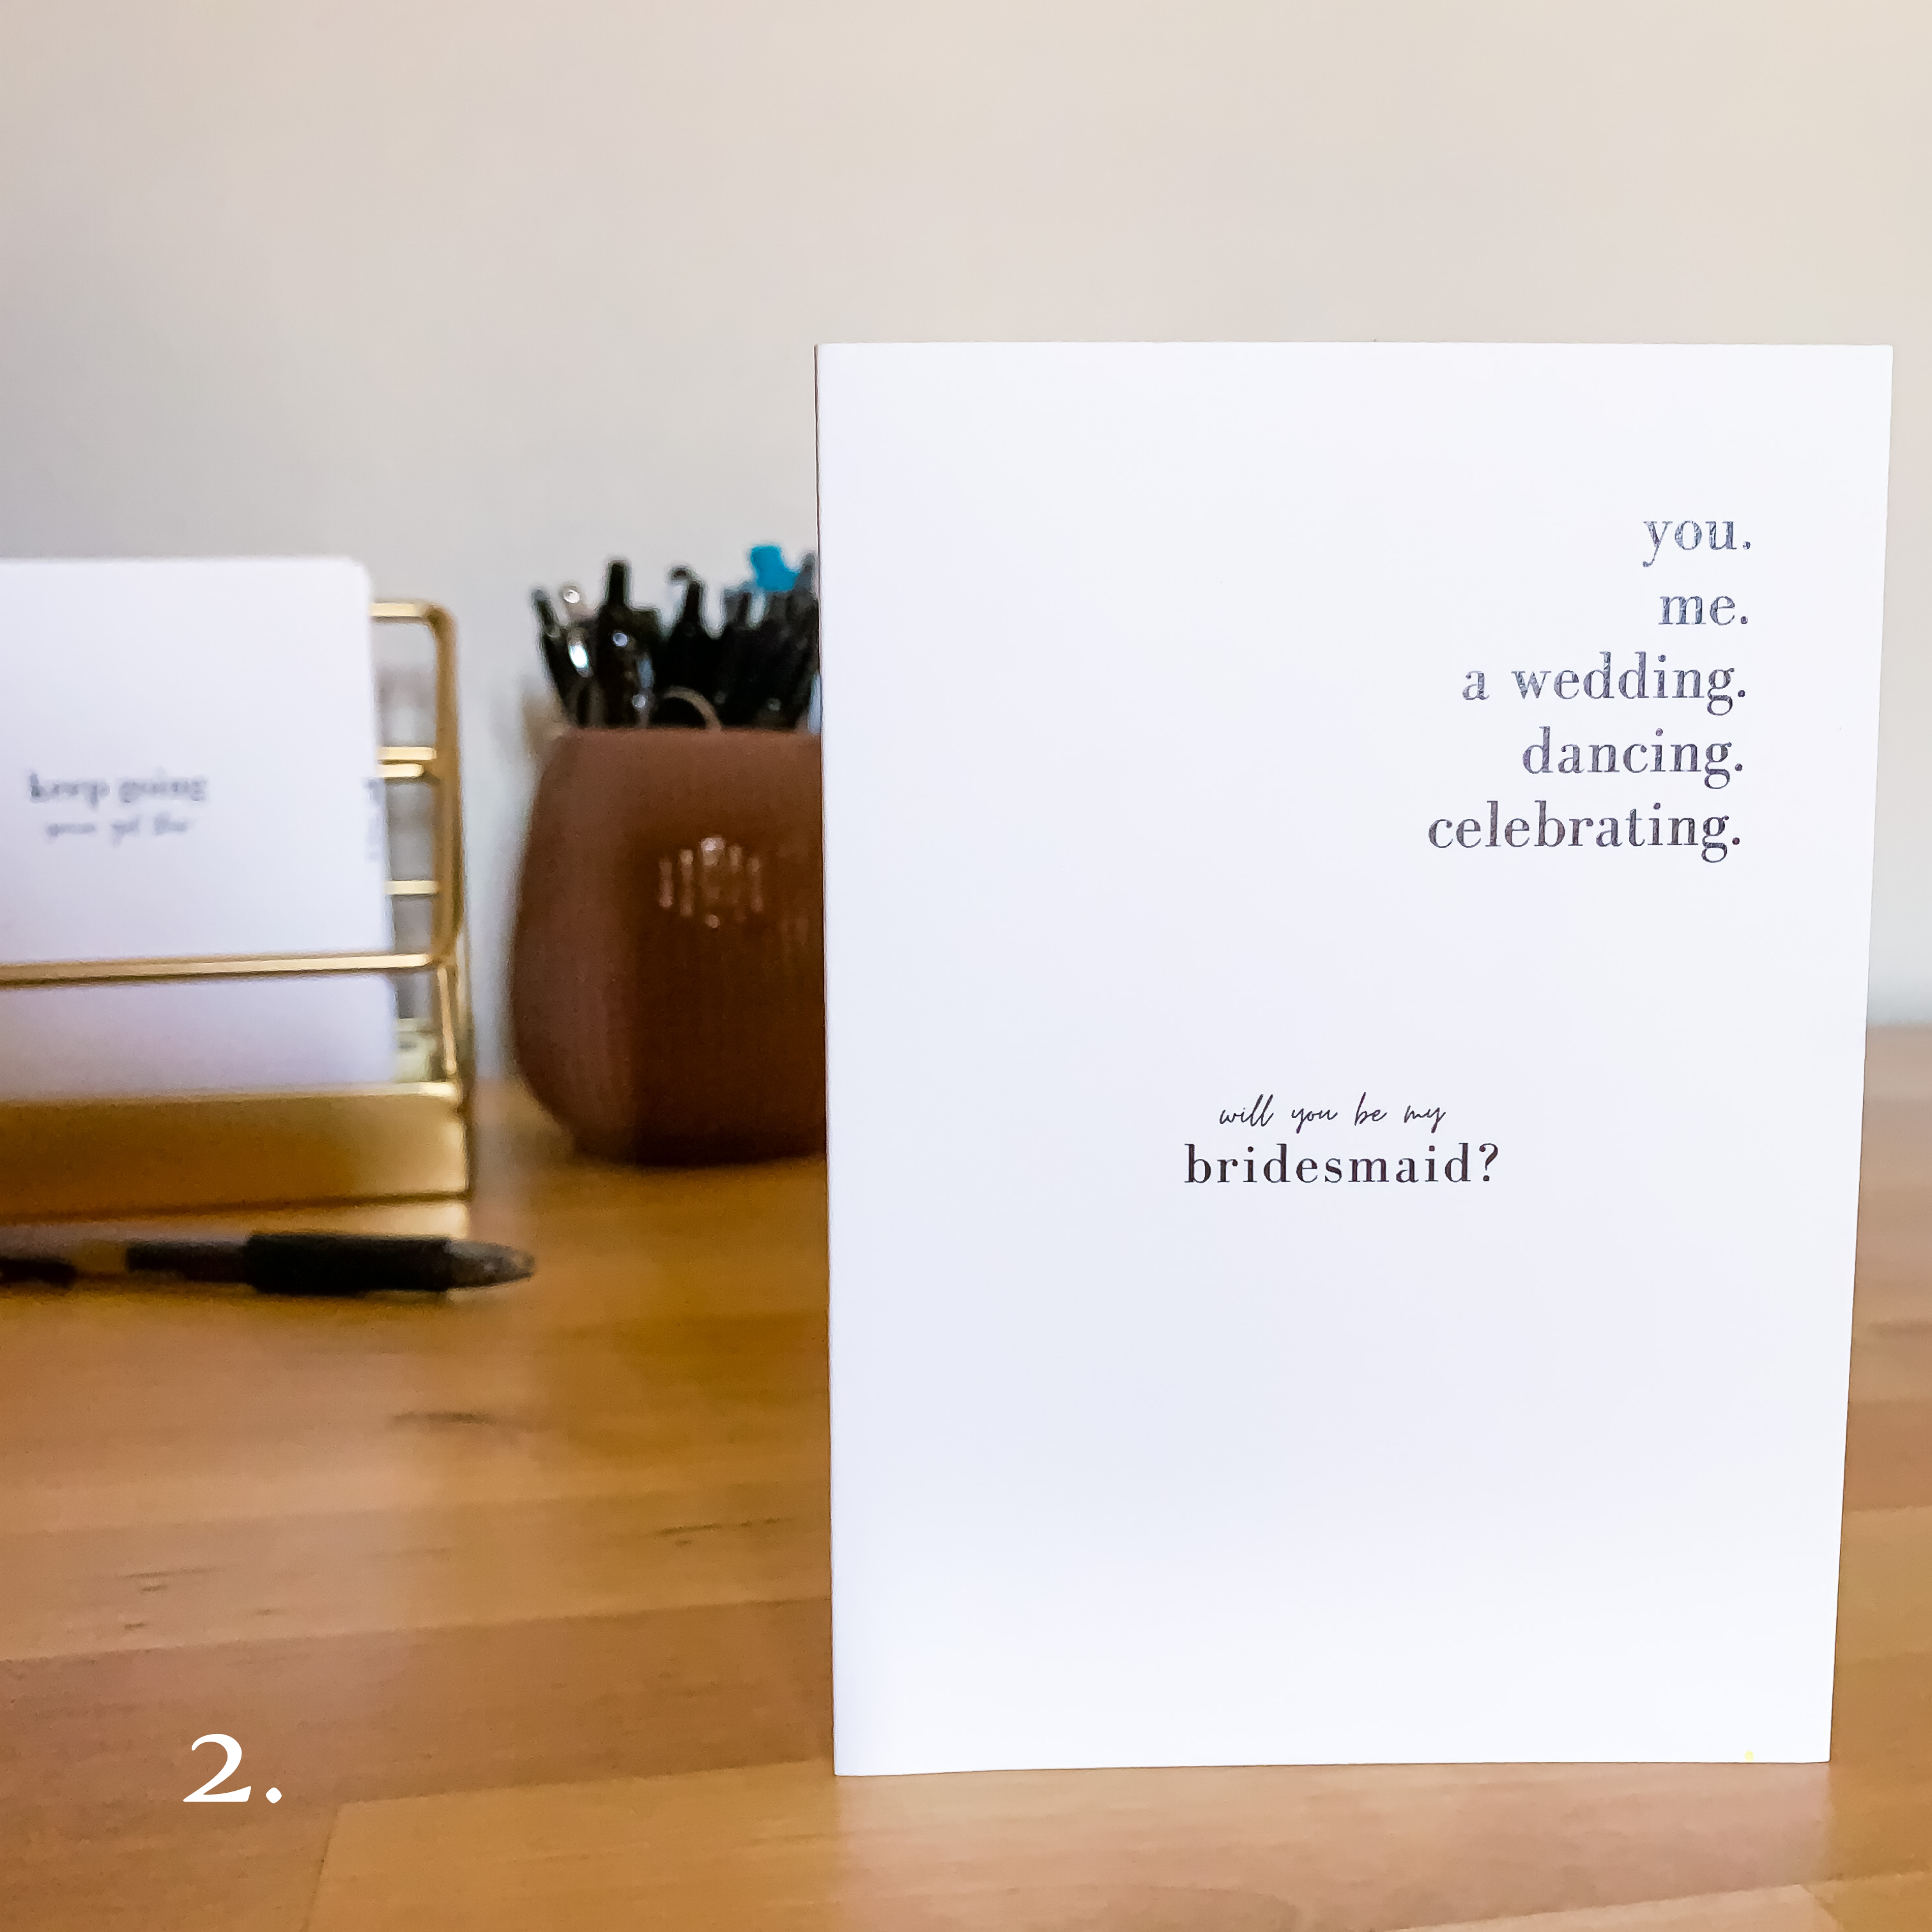 Wedding Cards